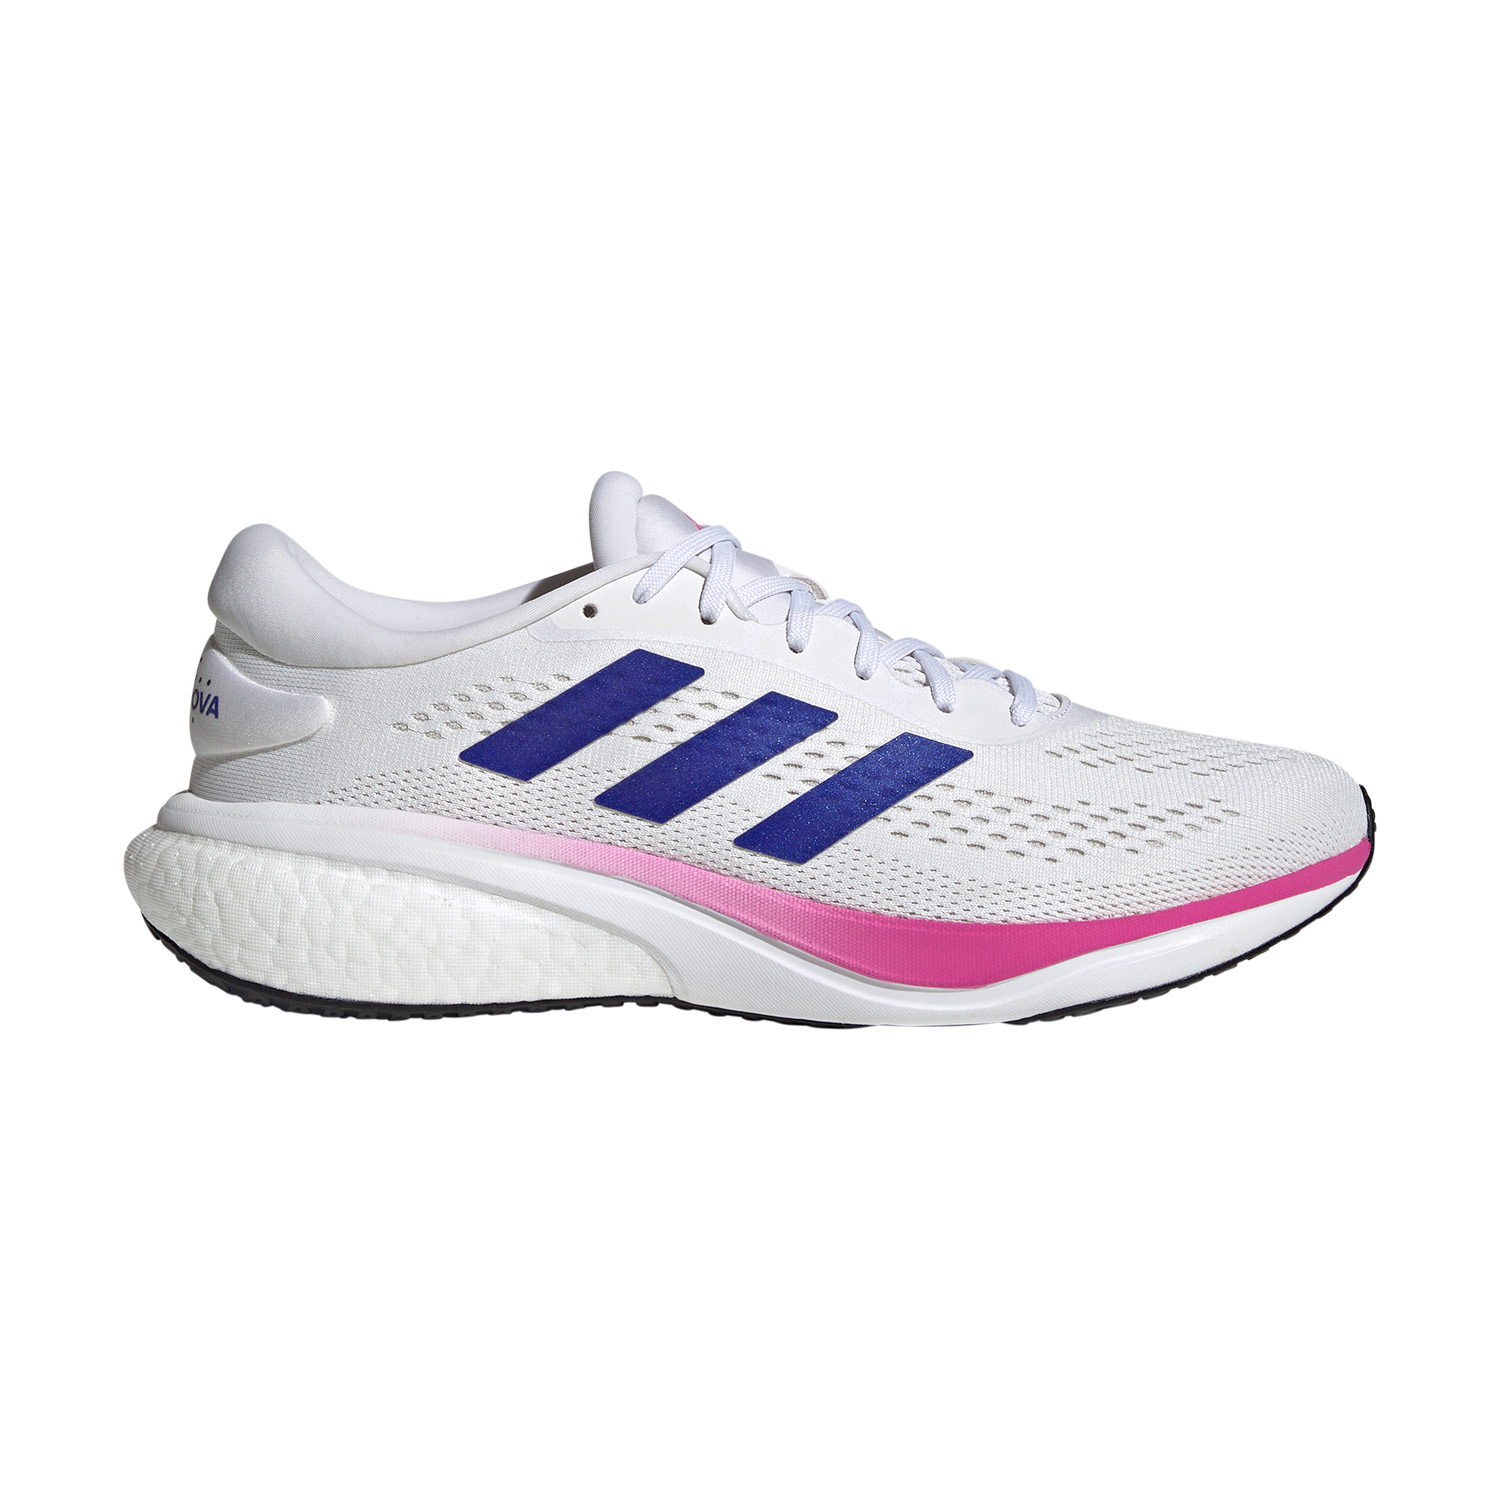 adidas 2 Men's Running Shoes - White/Lucid Blue